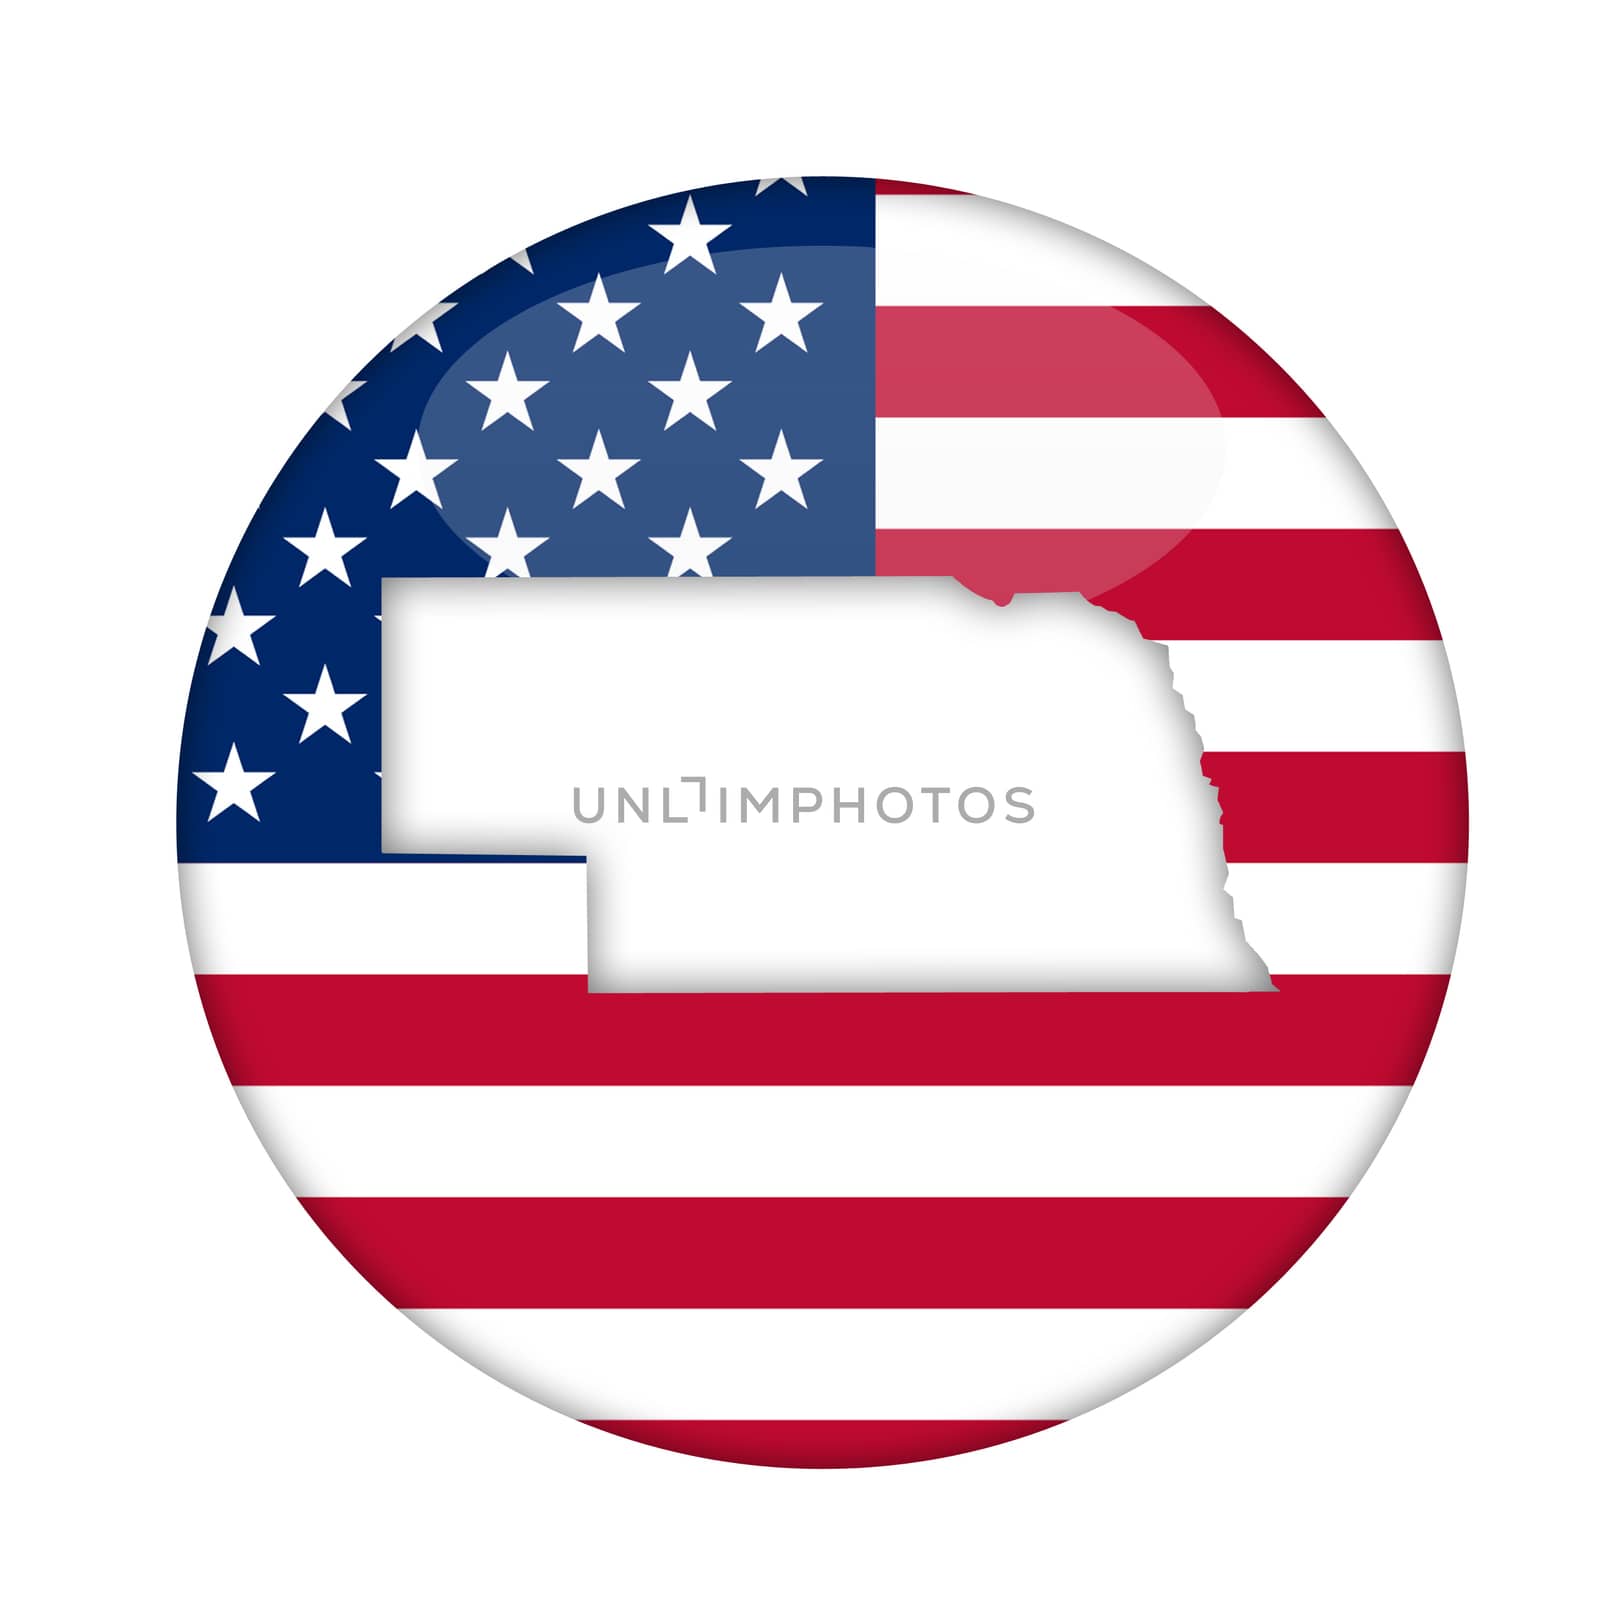 Nebraska state of America badge isolated on a white background.